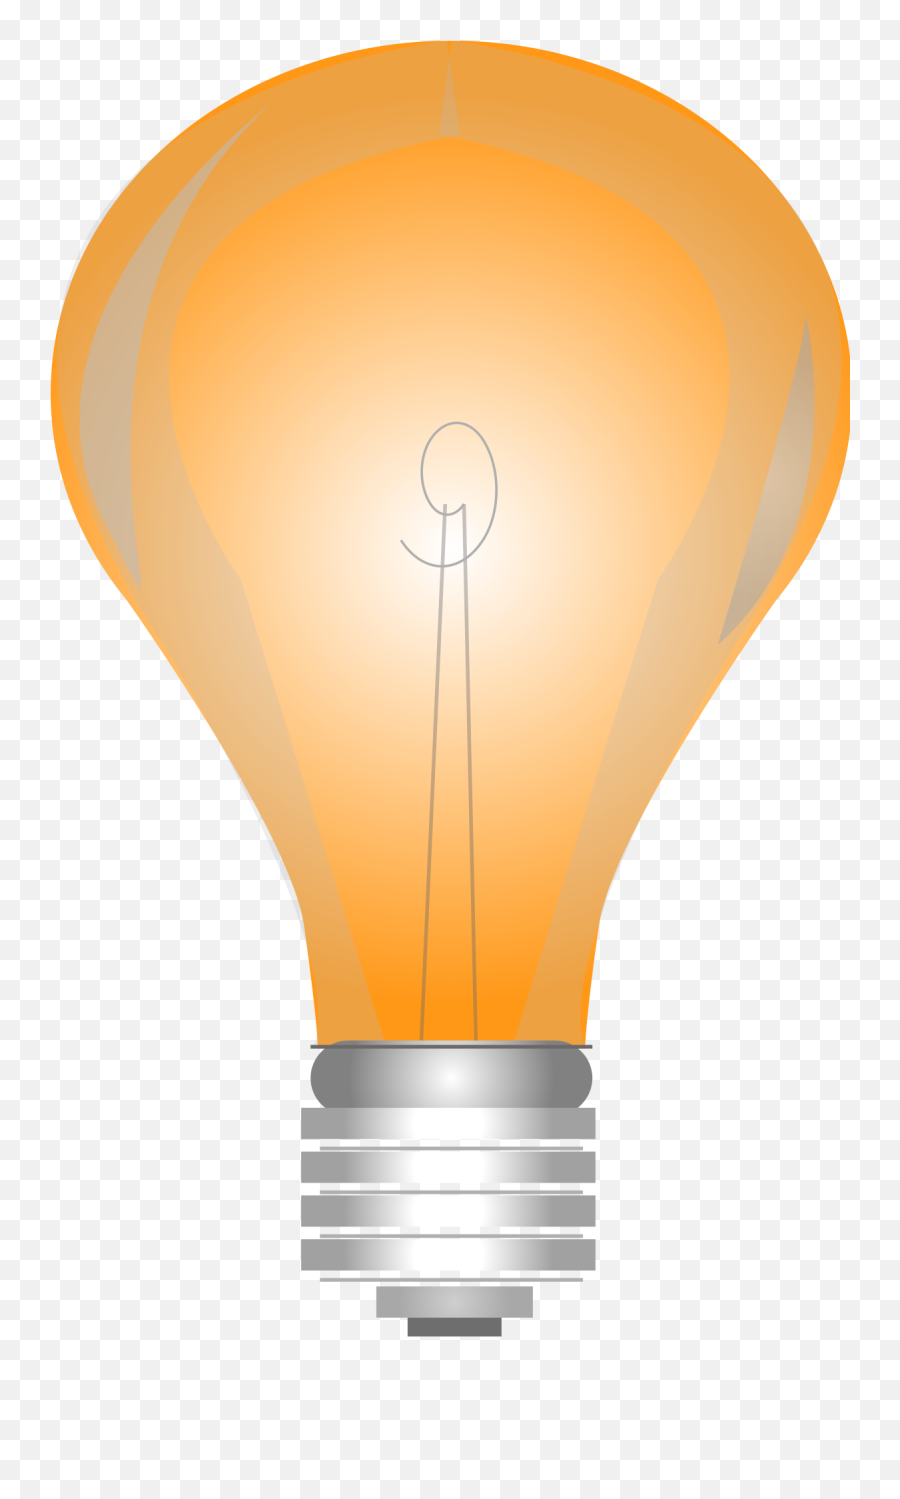 Filevandal - Lightsvg Wikipedia Emoji,Lightblub Emoji